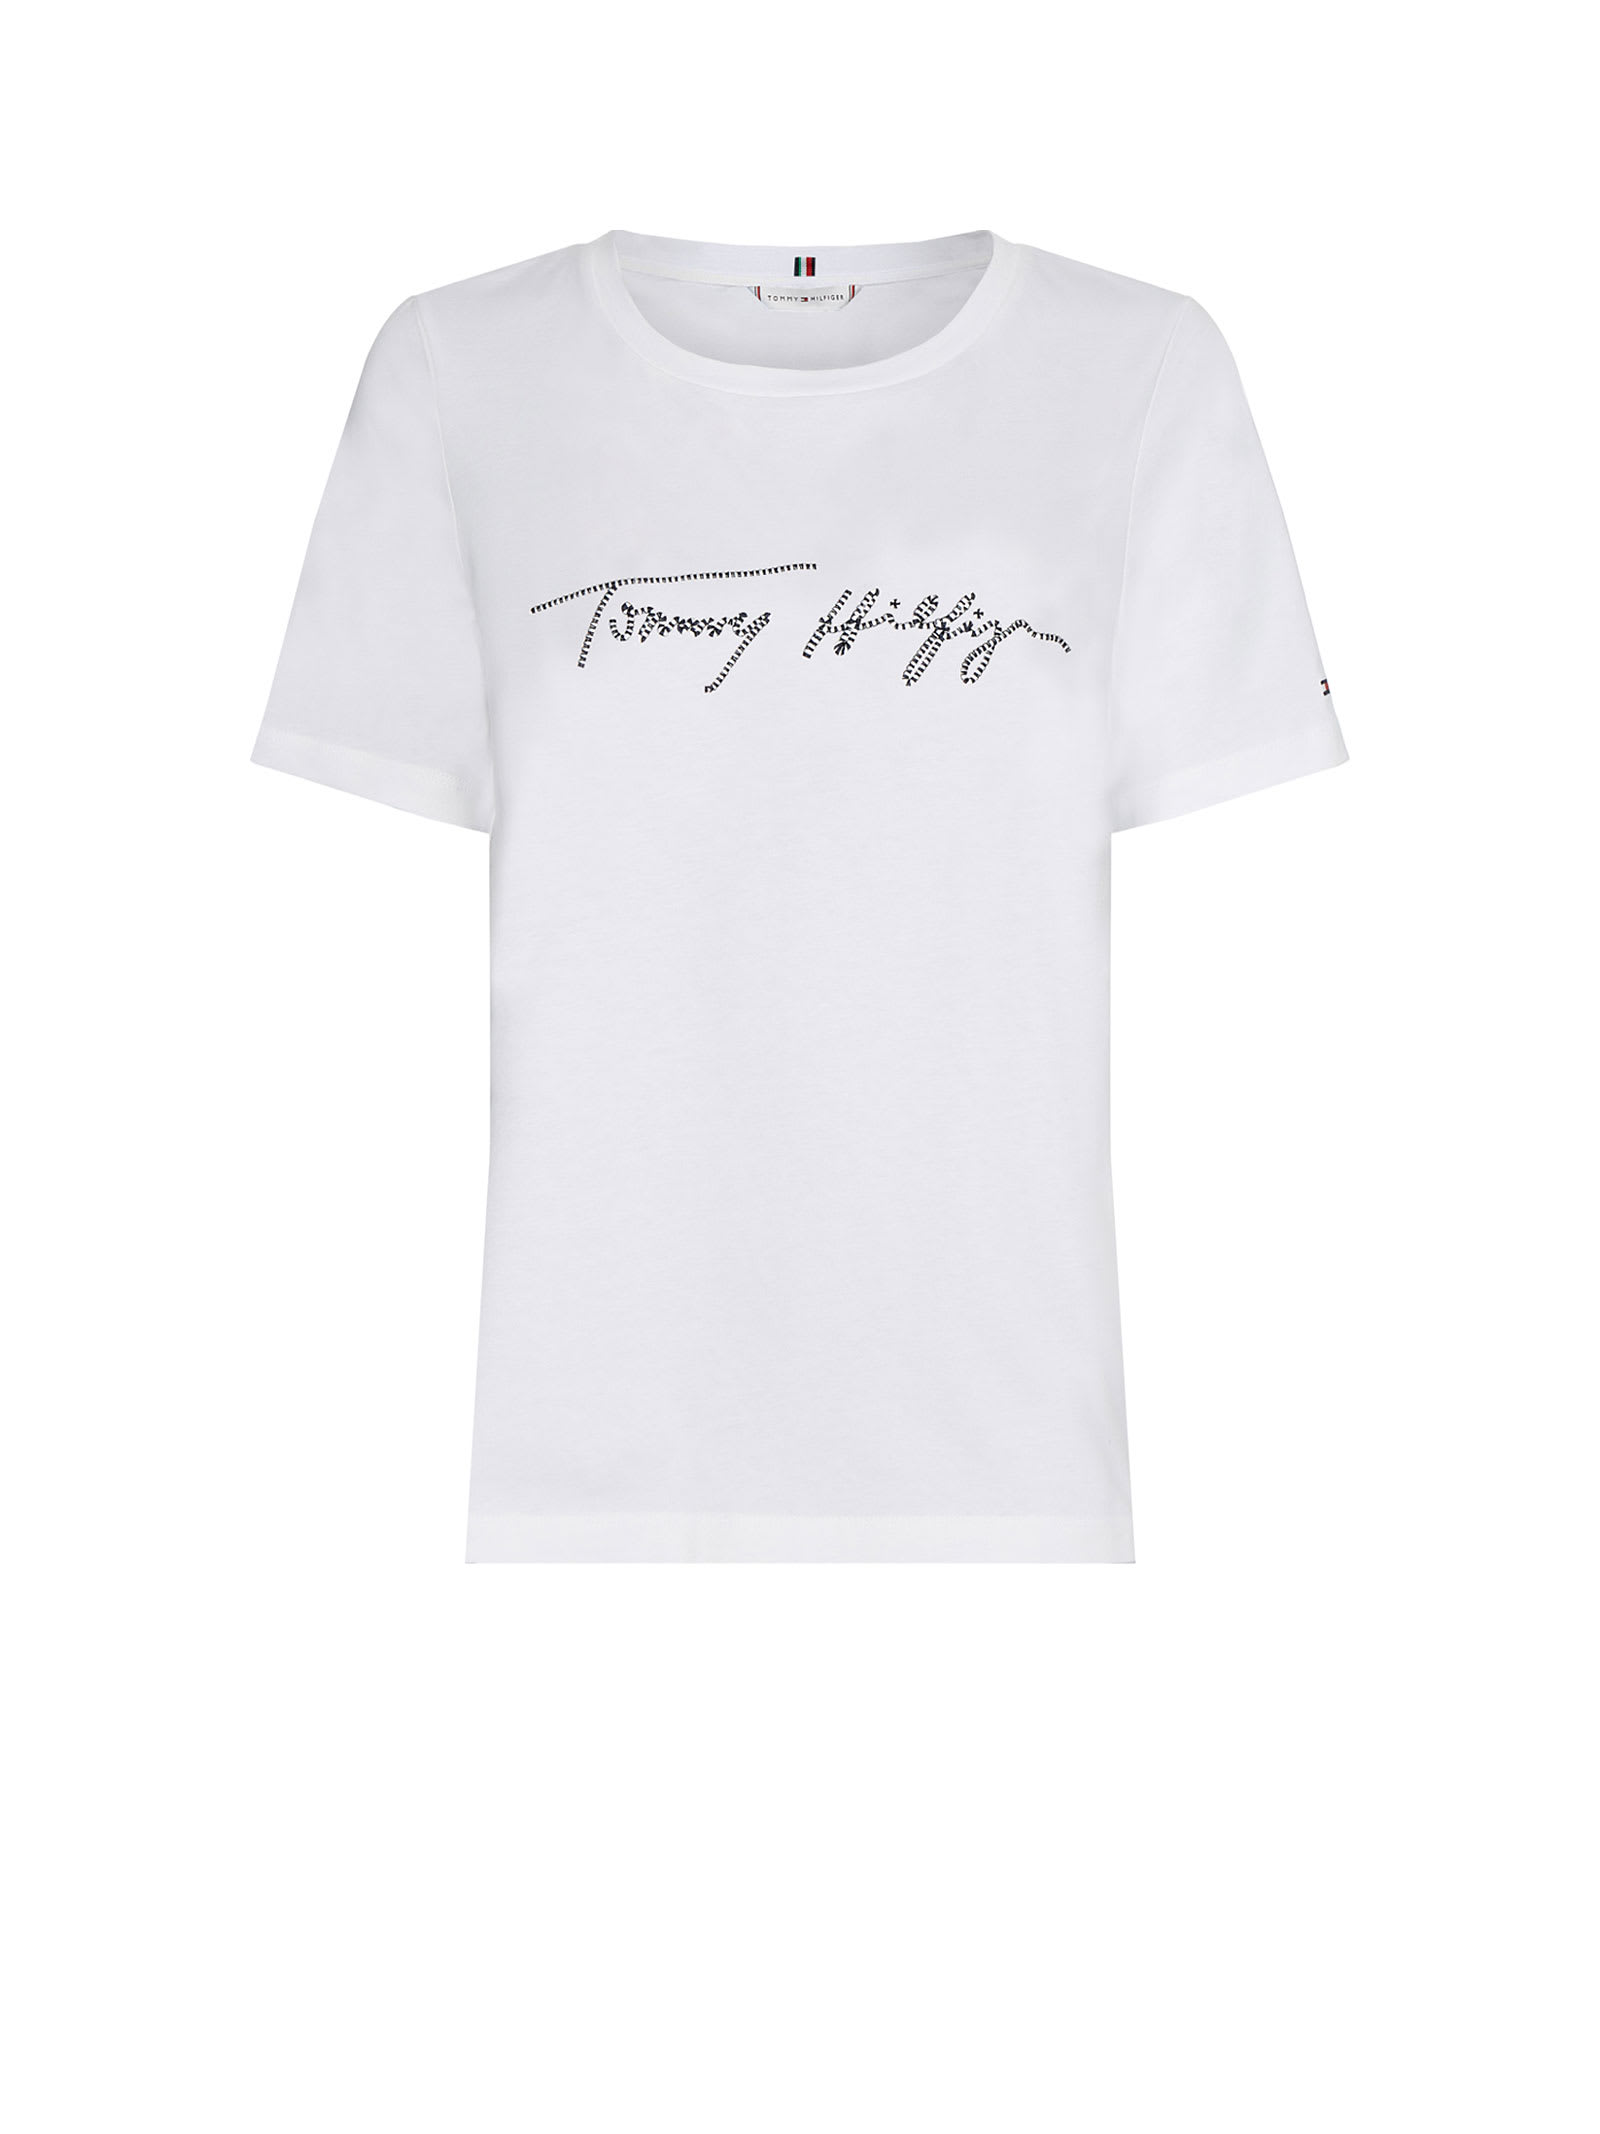 Tommy Hilfiger White Cotton T-shirt